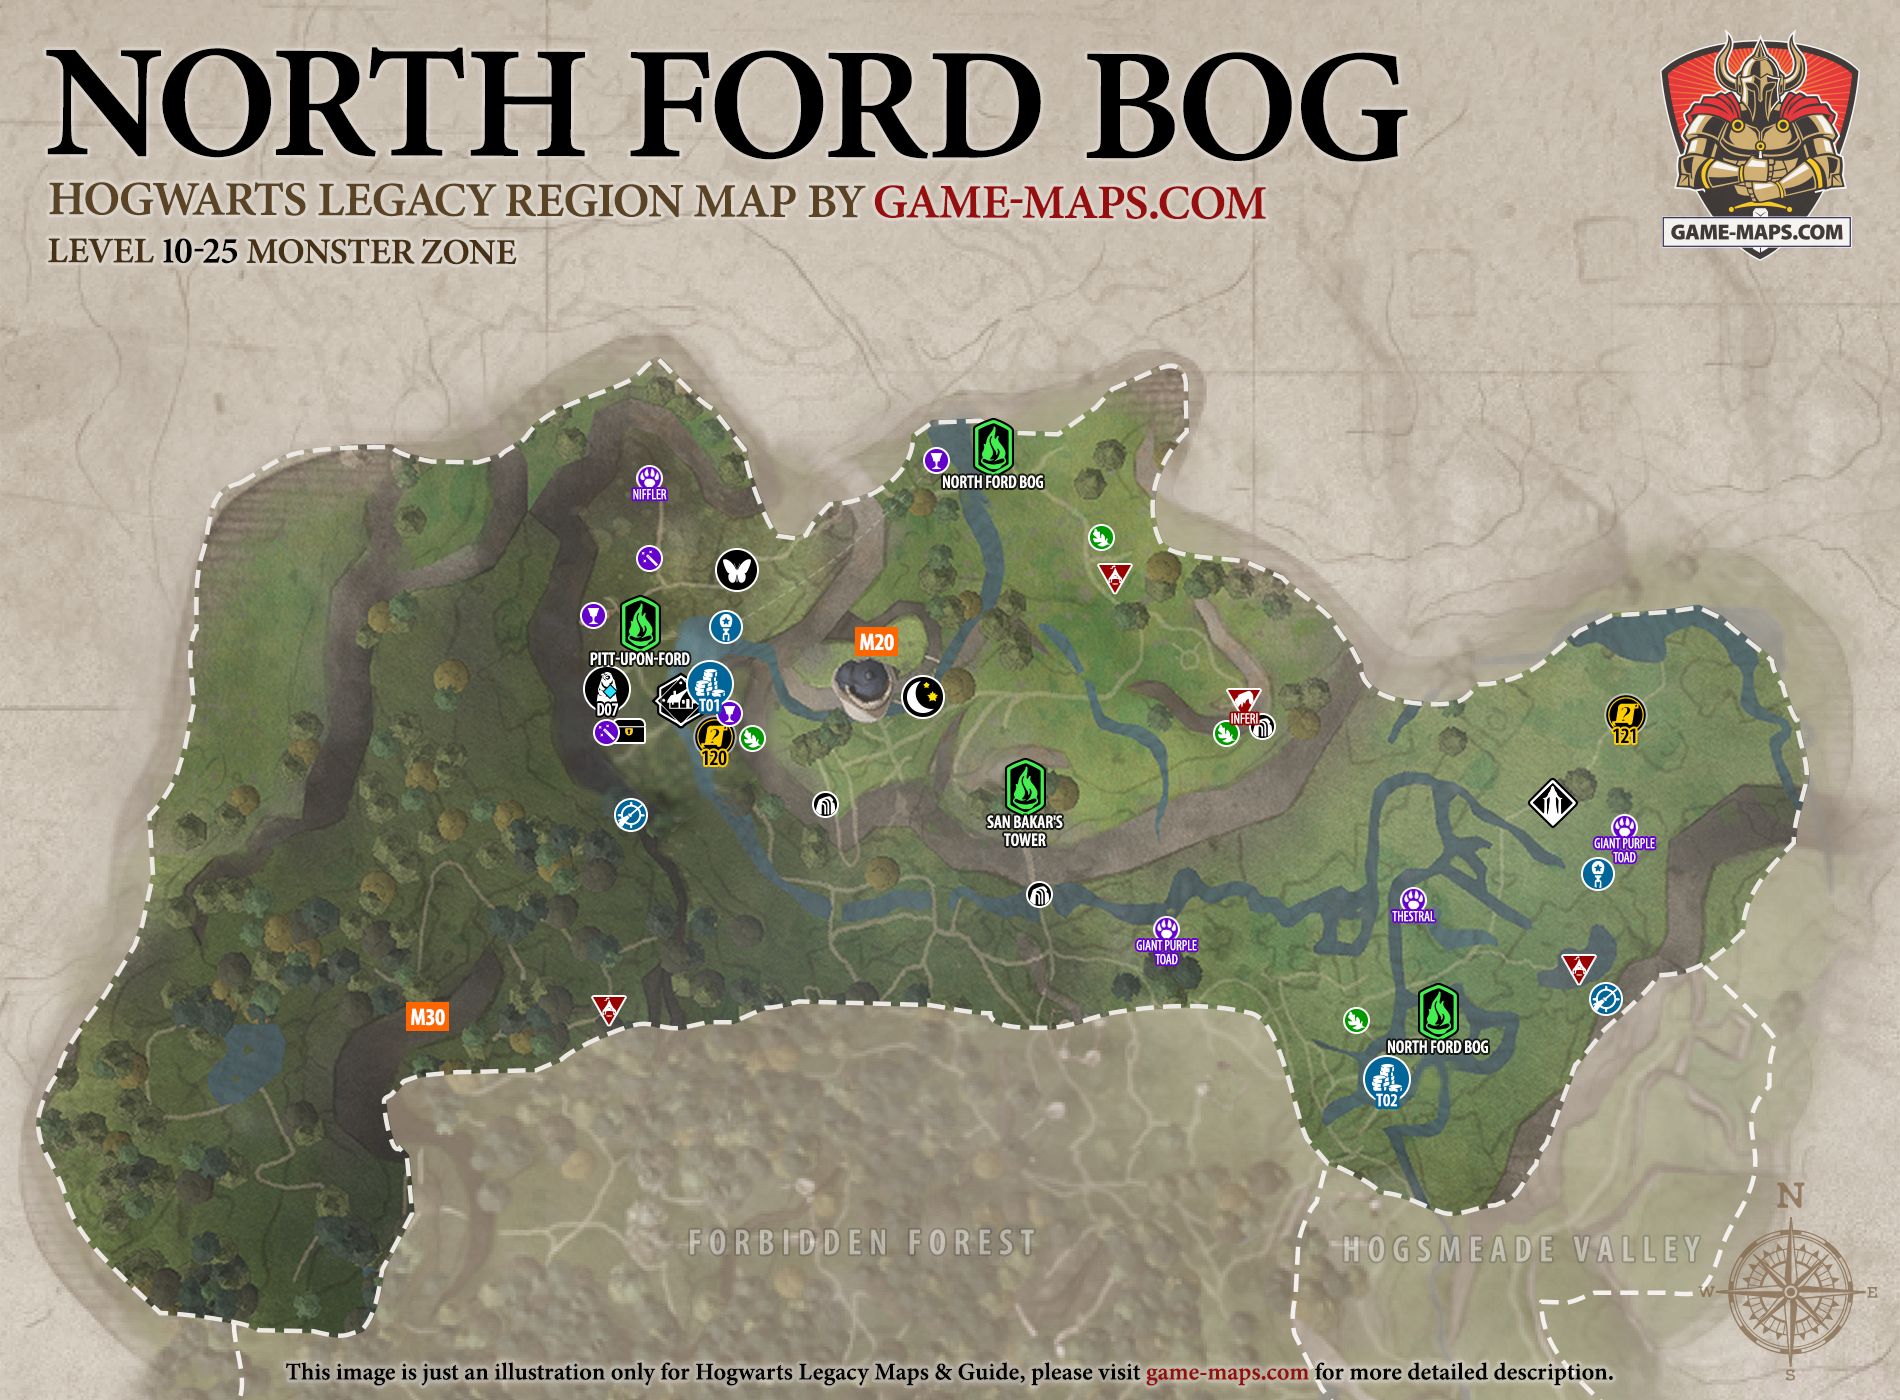 Hogwarts Legacy Map of North Ford Bog